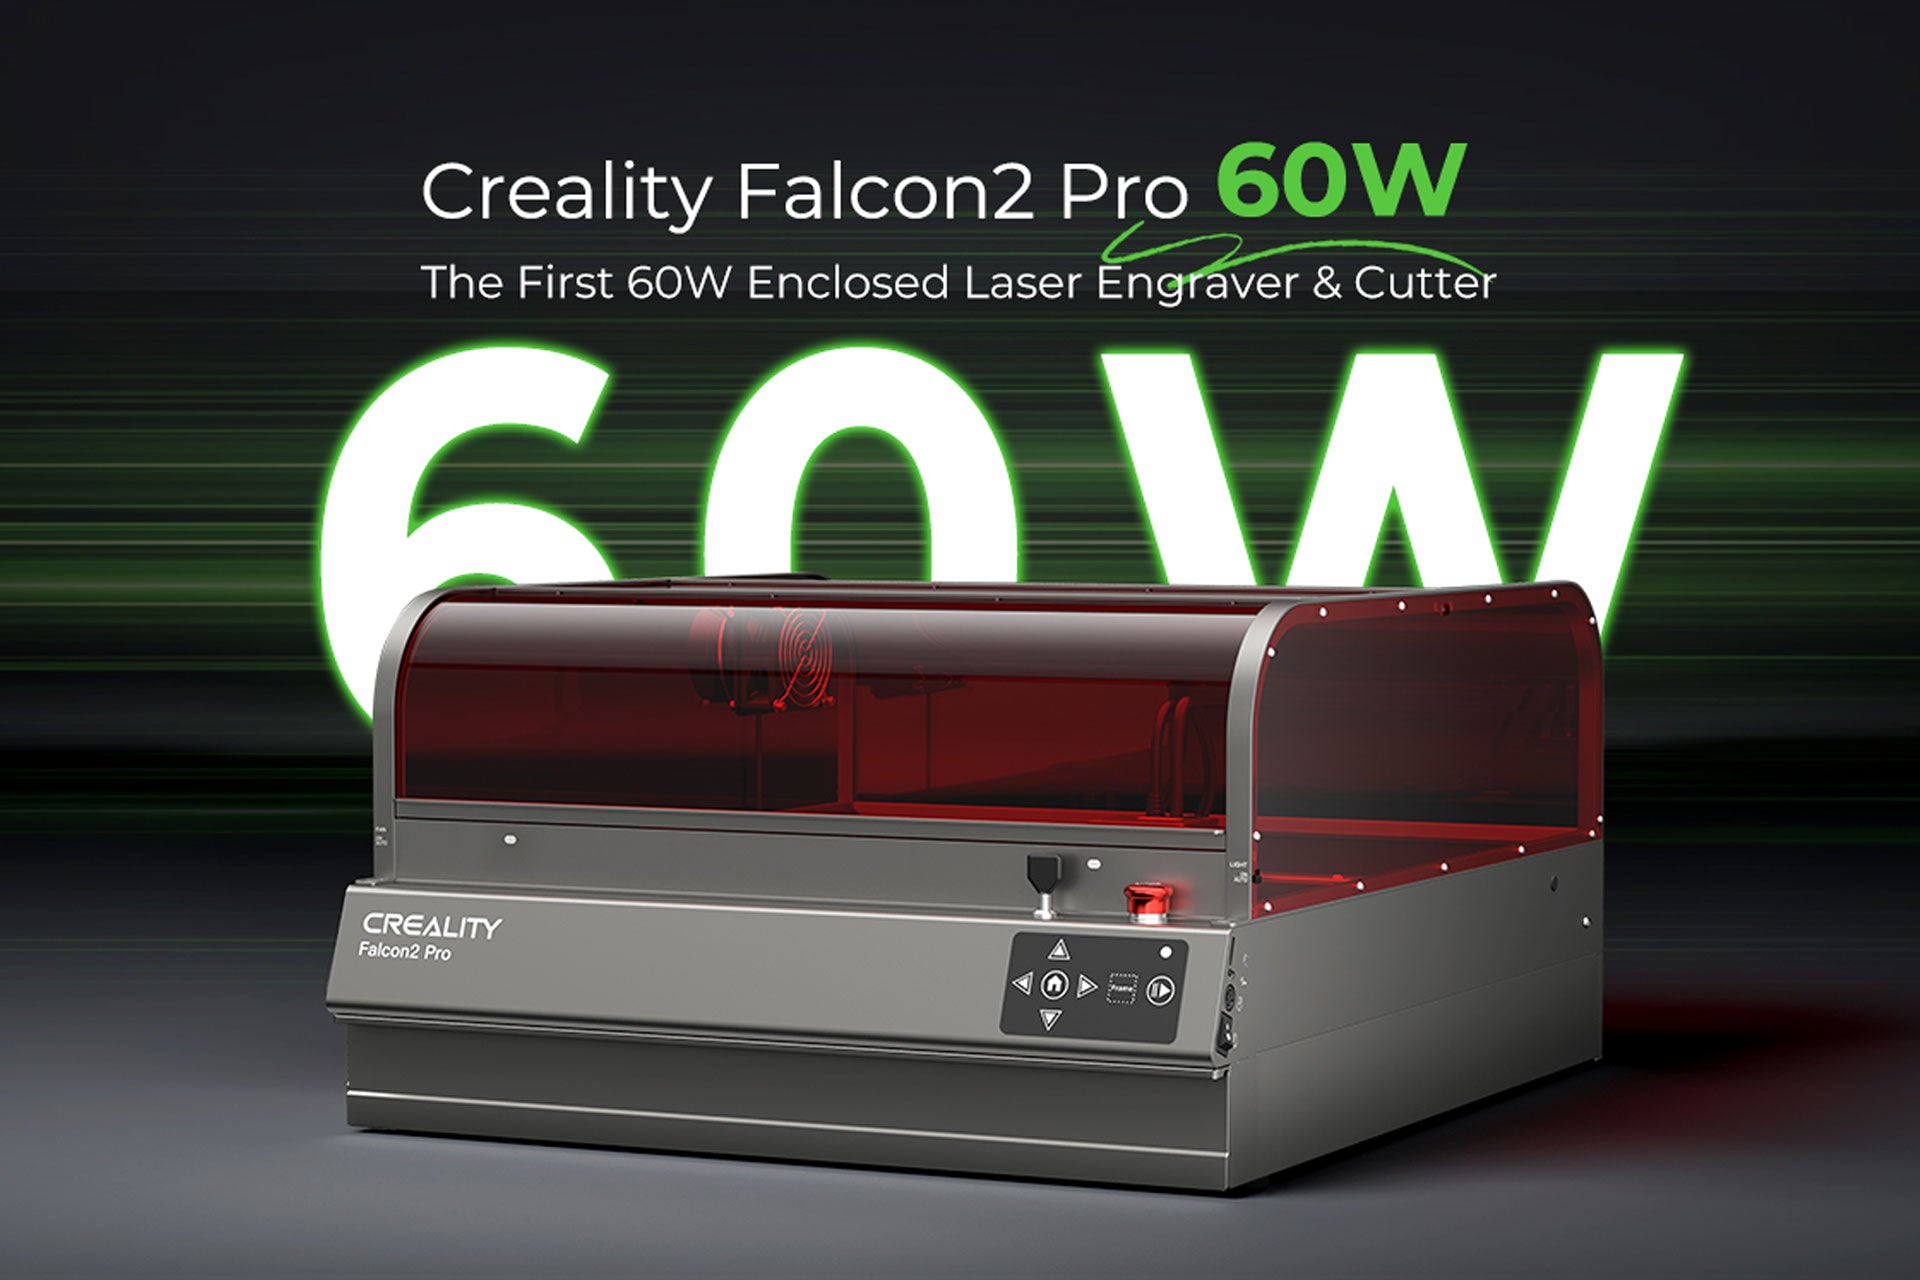 Creality Falcon2 Pro 60W Laser Engraving Machine